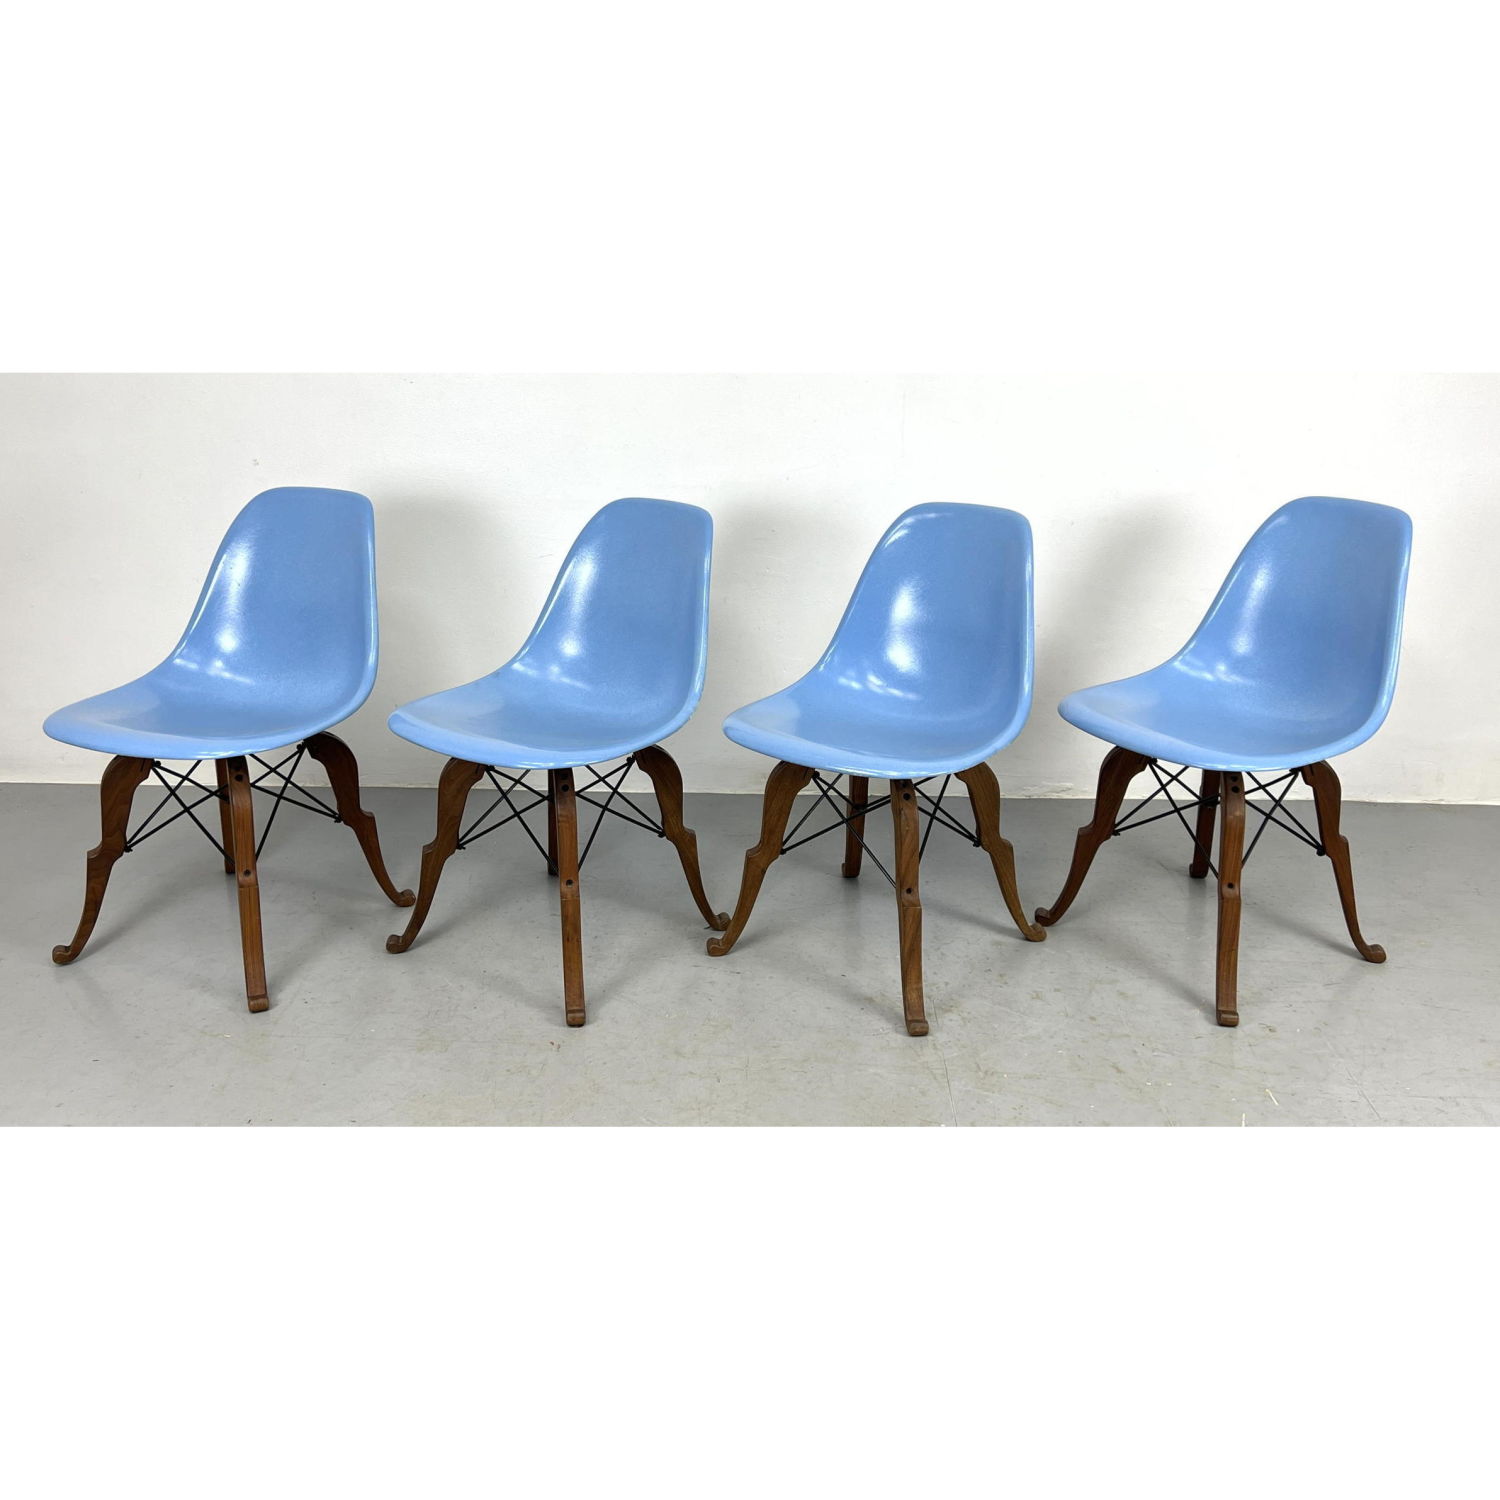 Set 4 MODERNICA Shell Chairs by 2ff07e